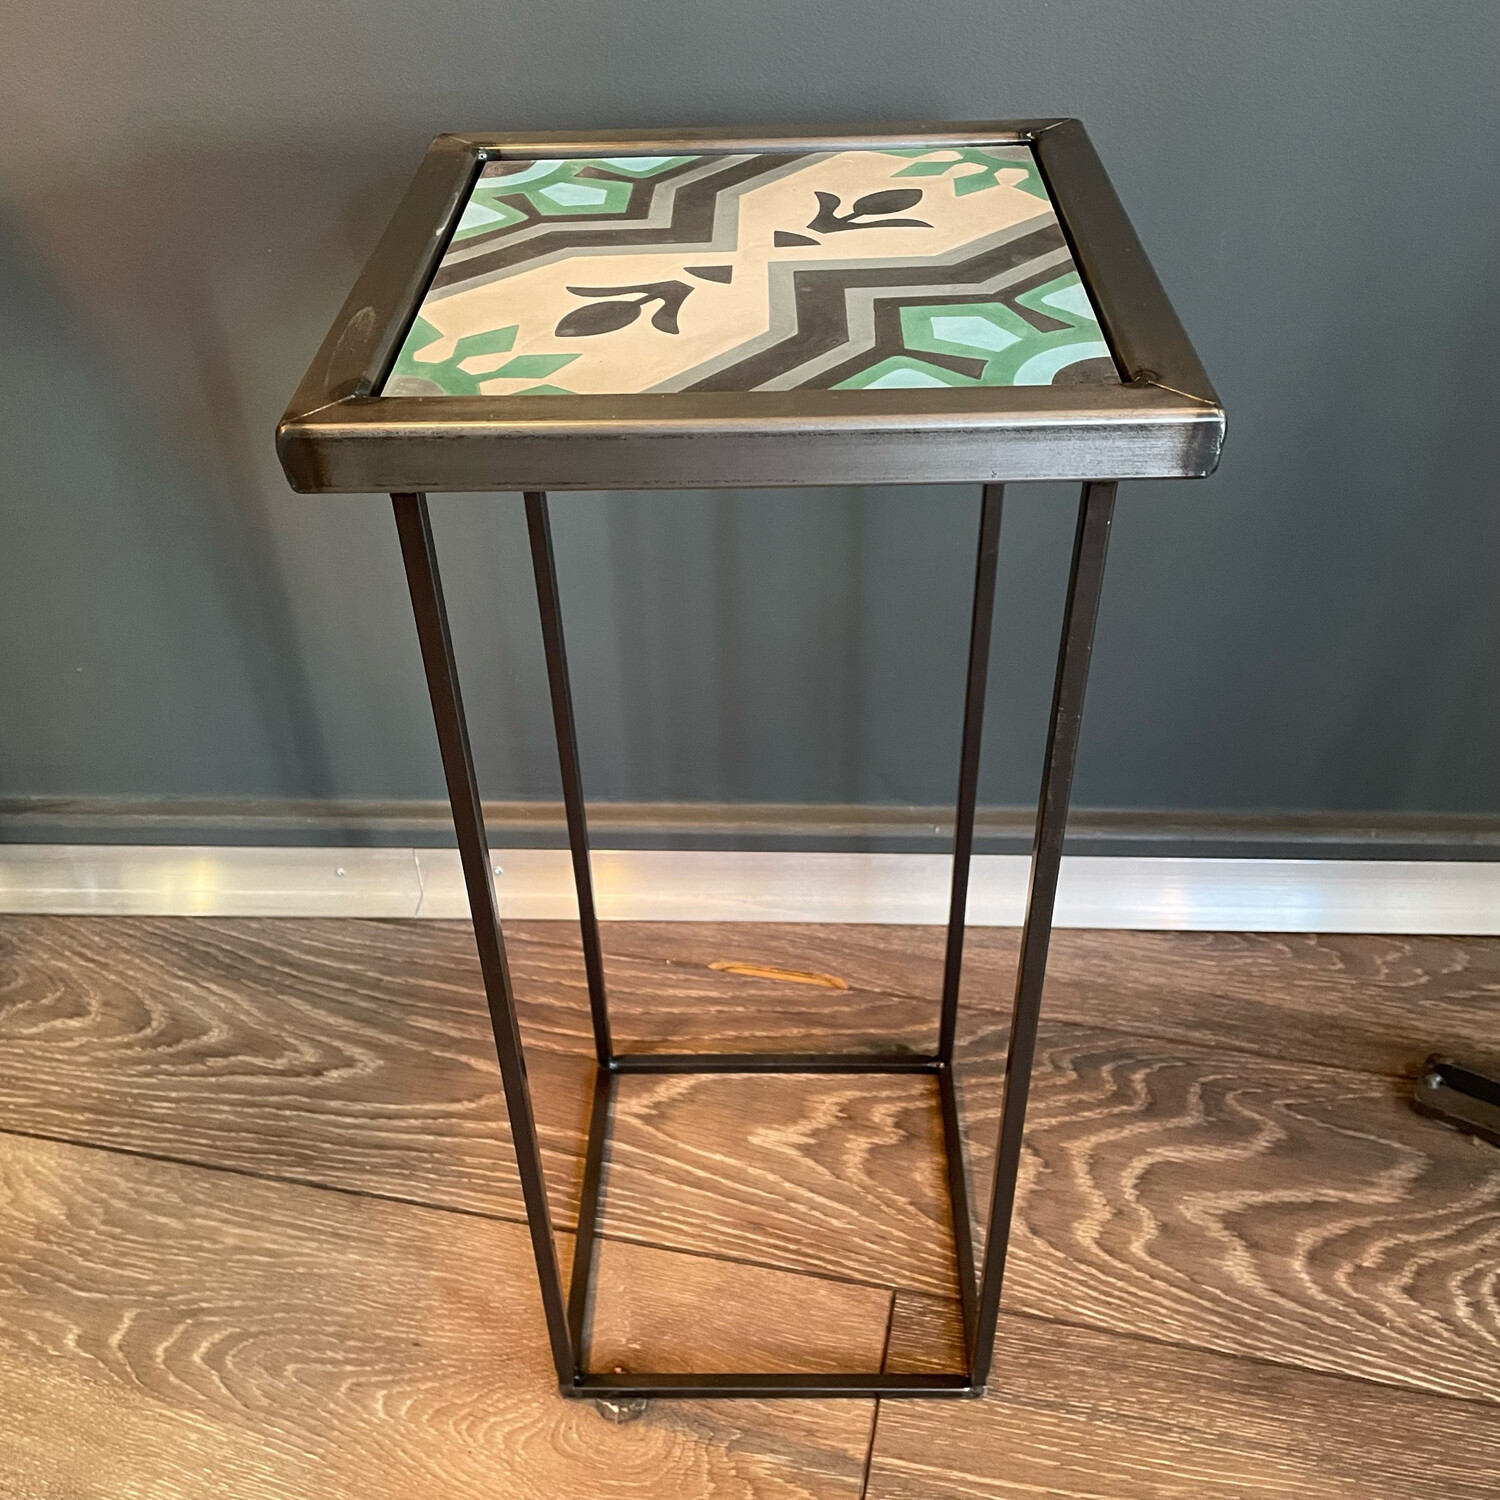 Steel Table With Encaustic Tile Top